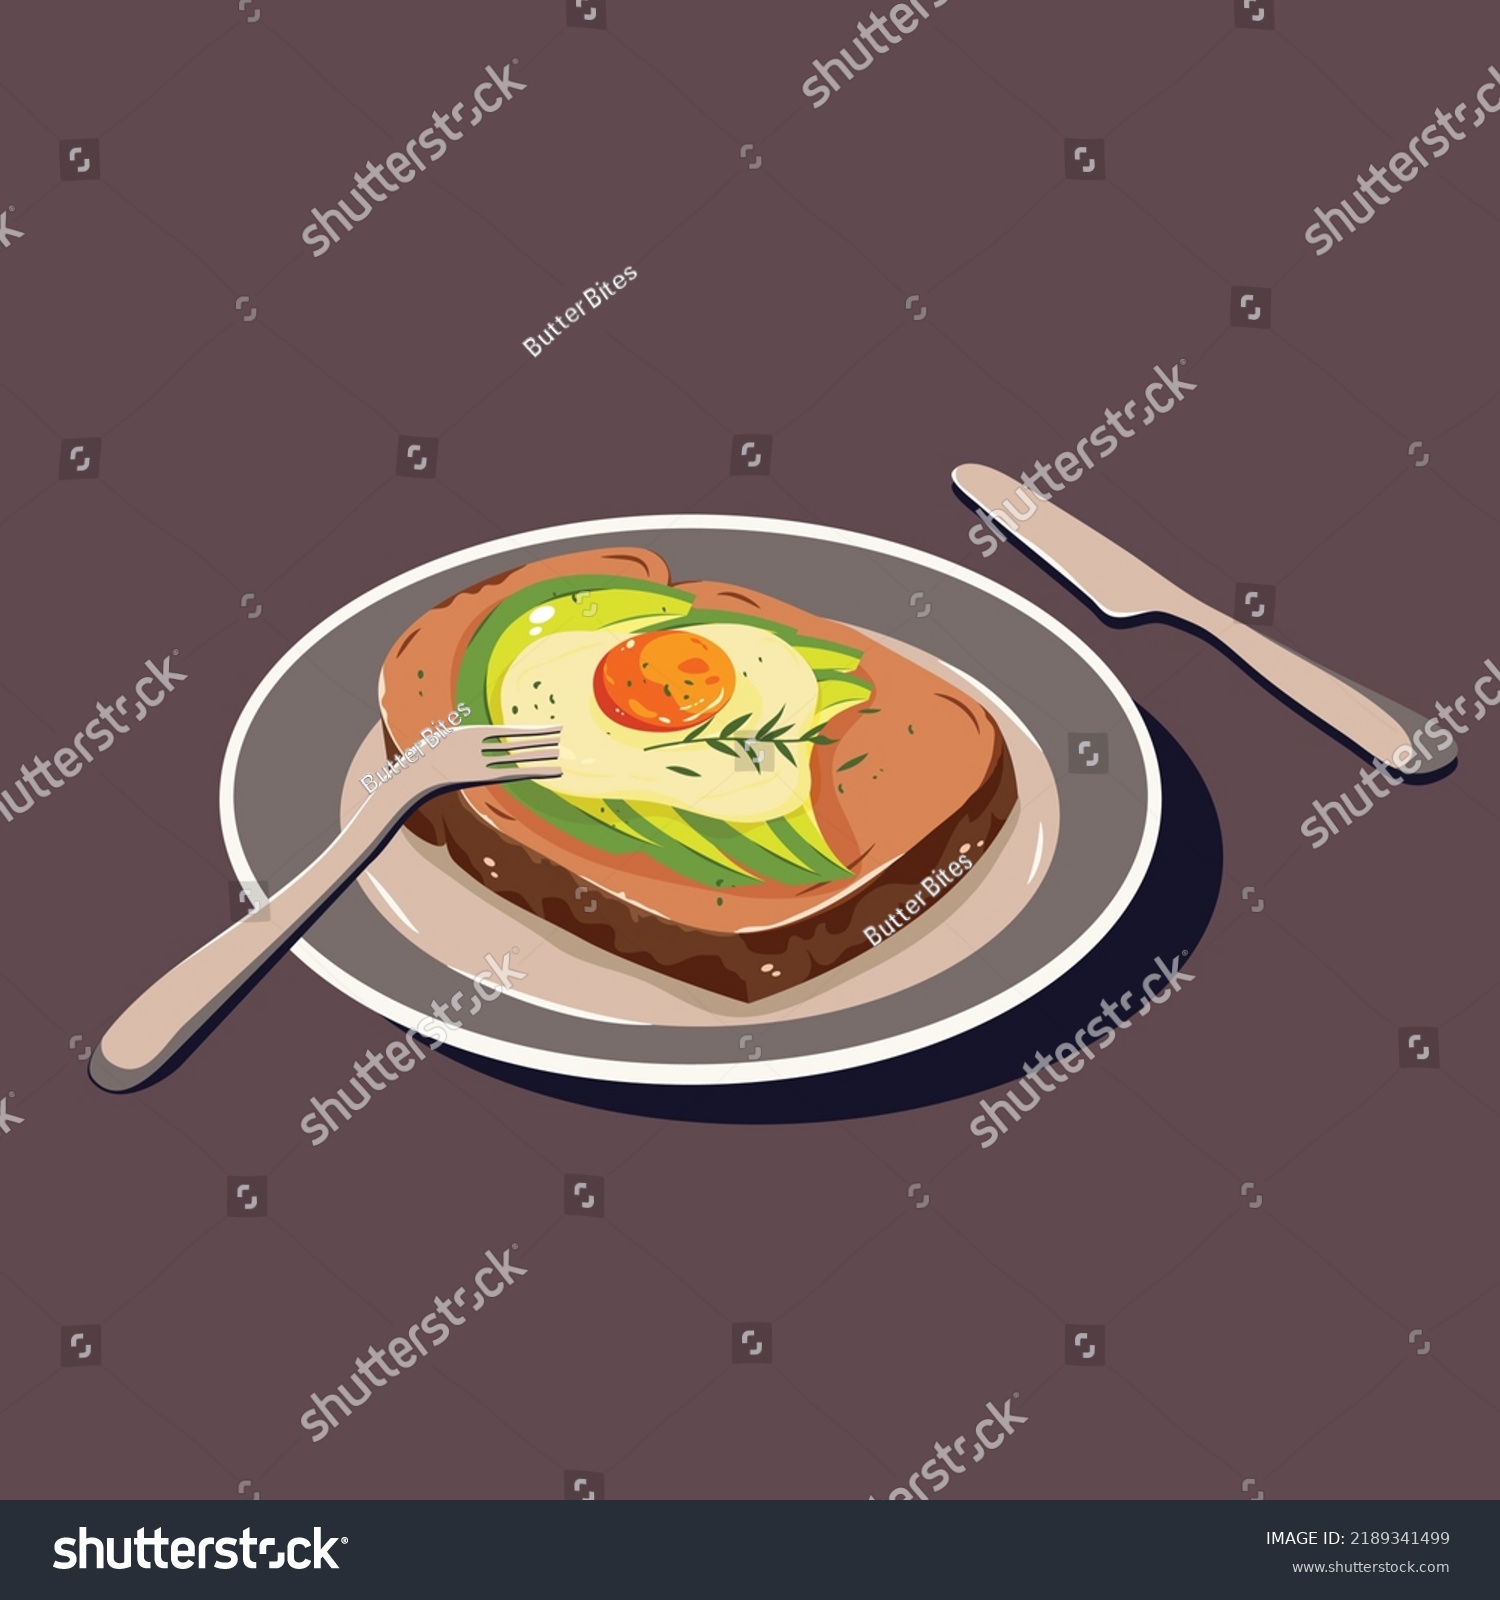 SVG of vector illustration of avocado toast in plate for breakfast. svg